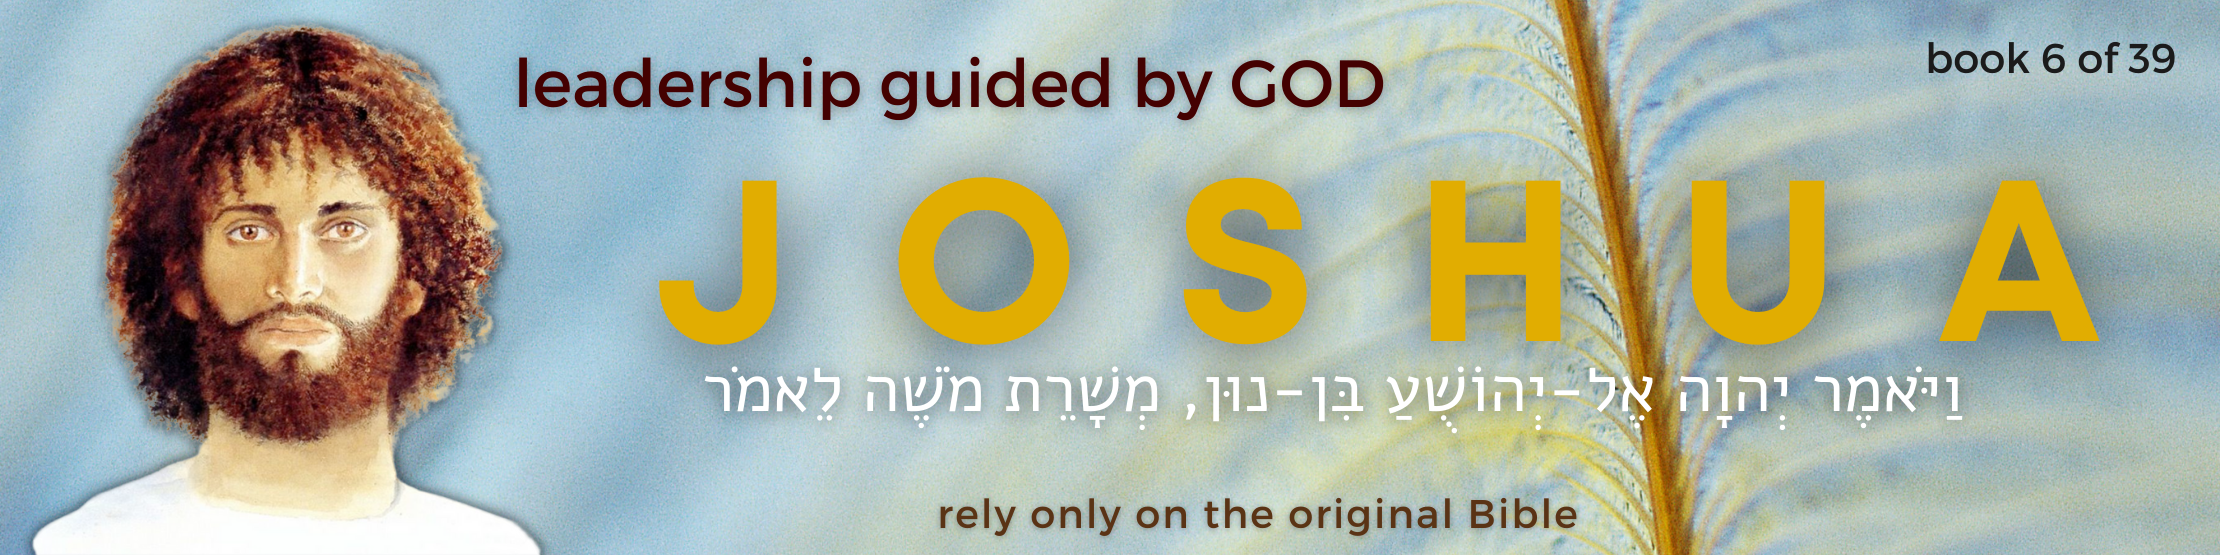 6 Joshua book - original bible - banner